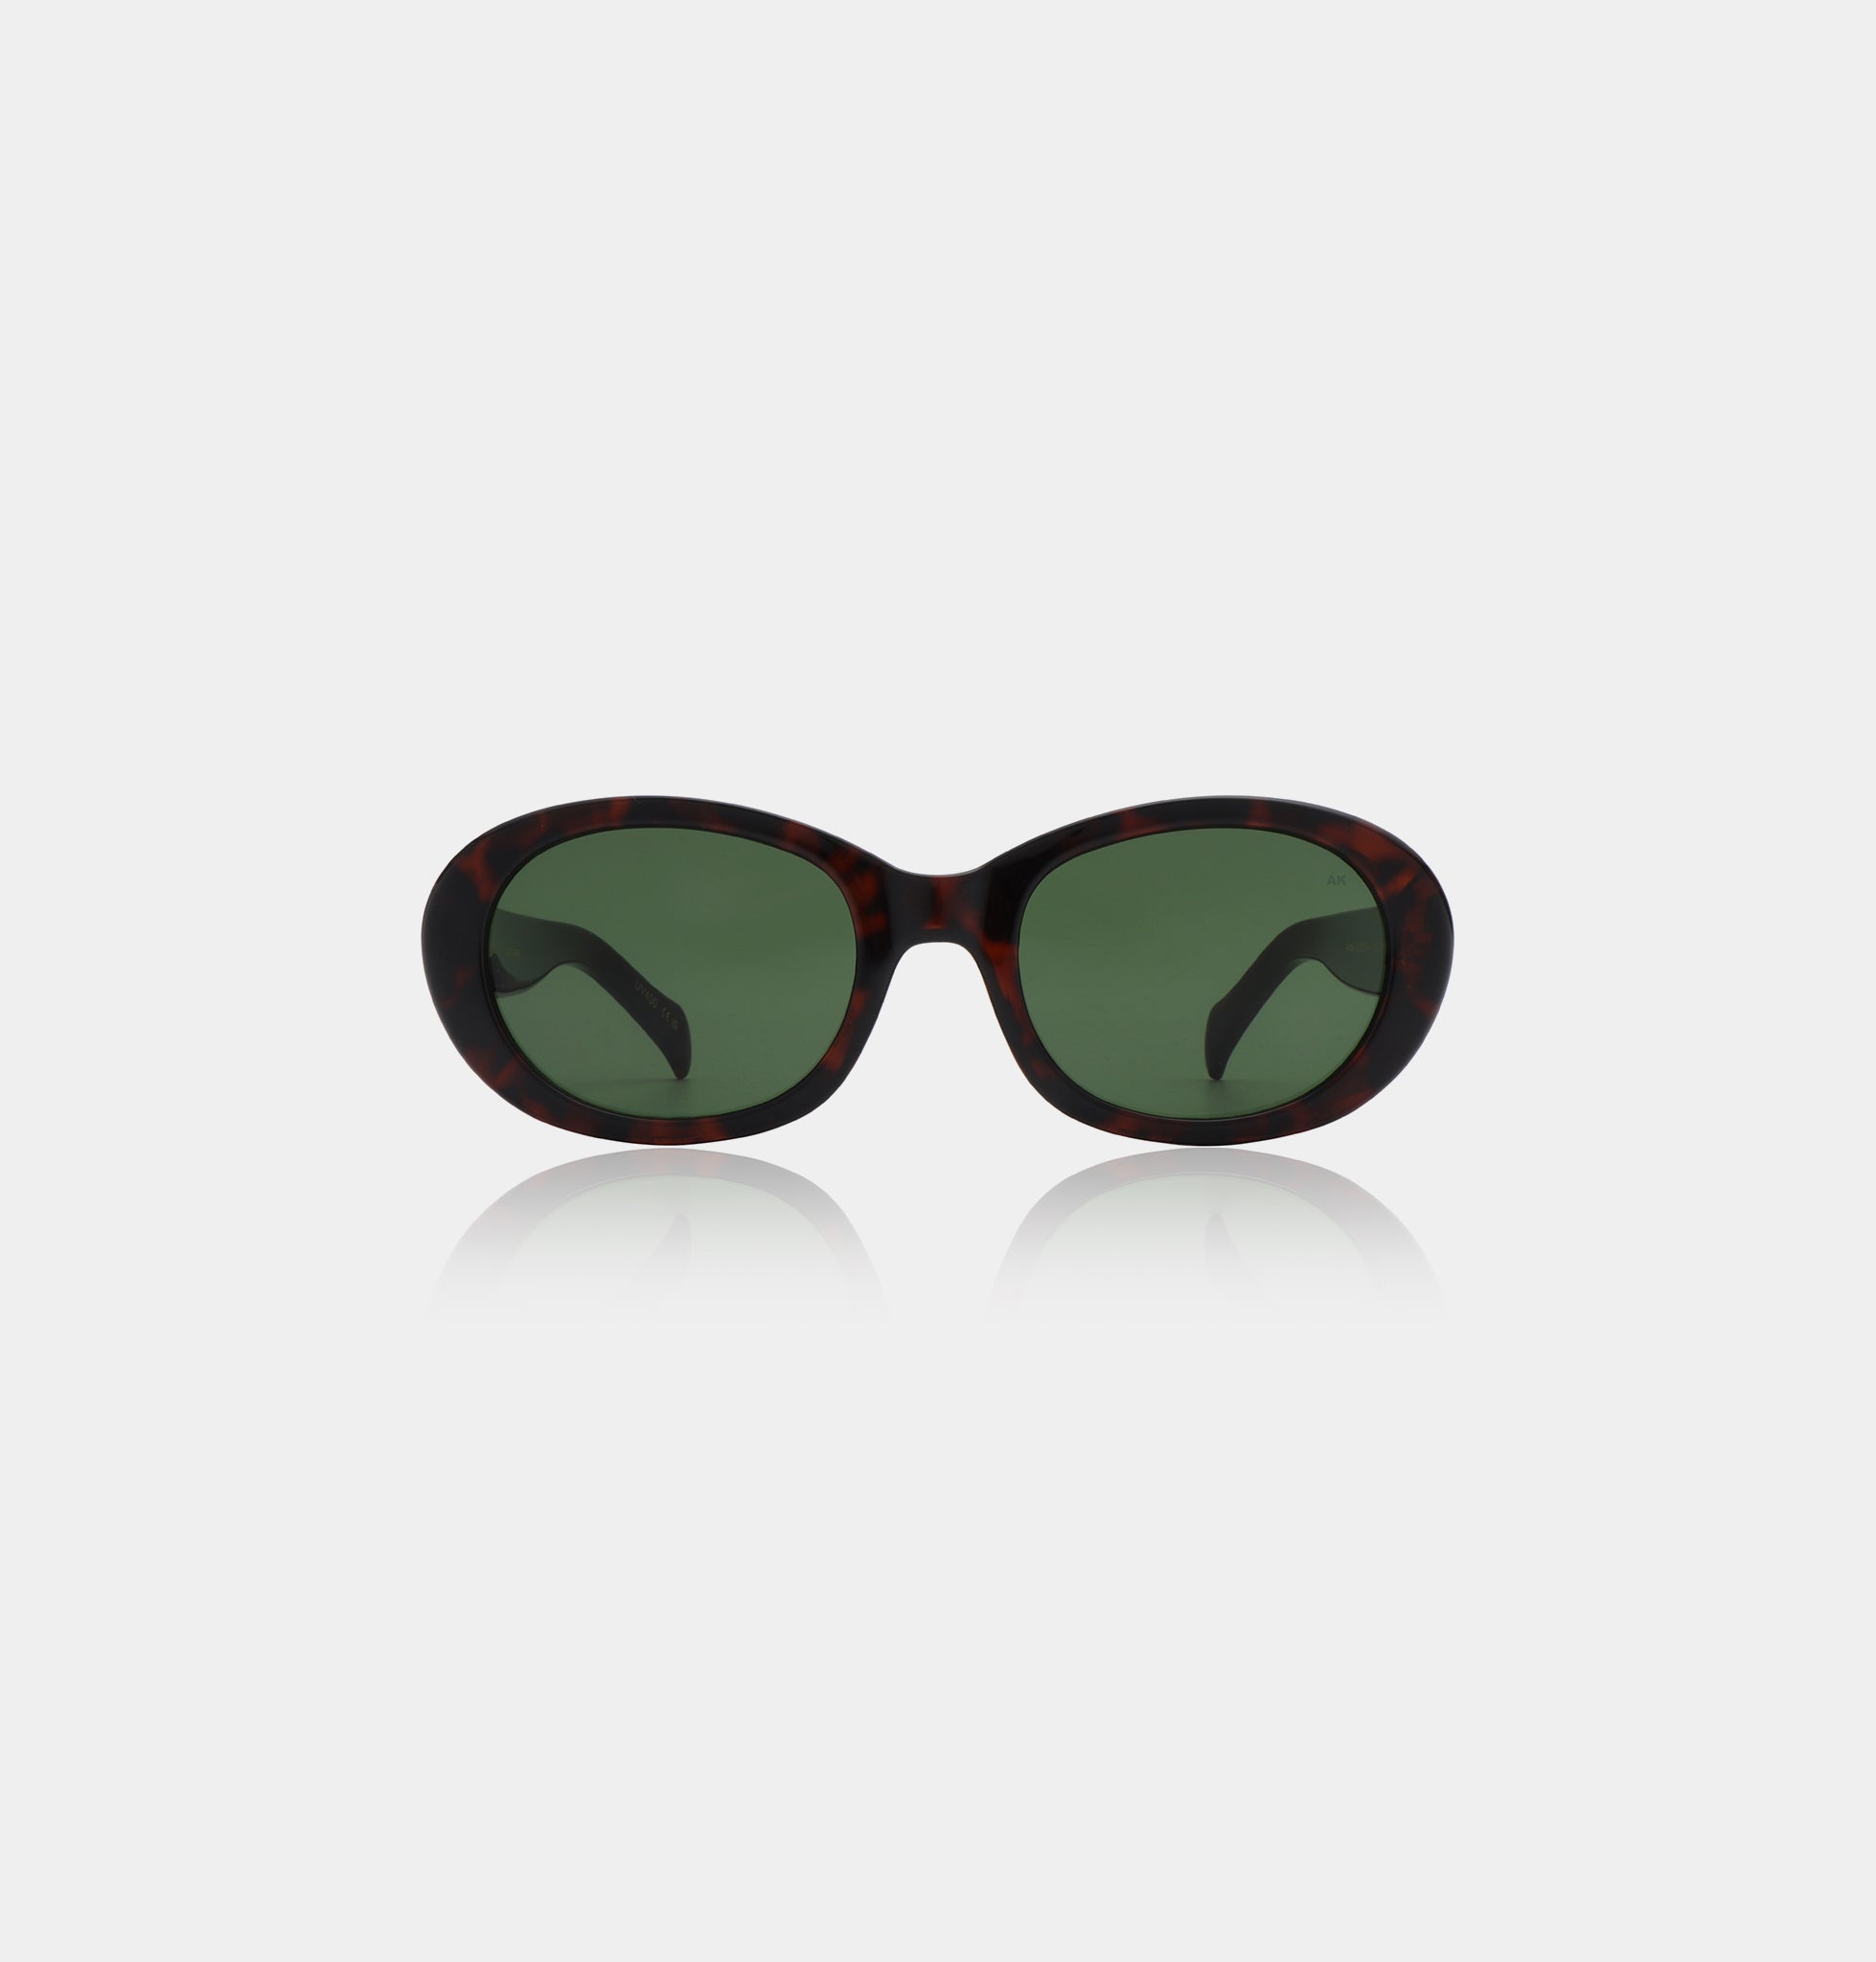 Anma sunglasses in demi tortoise